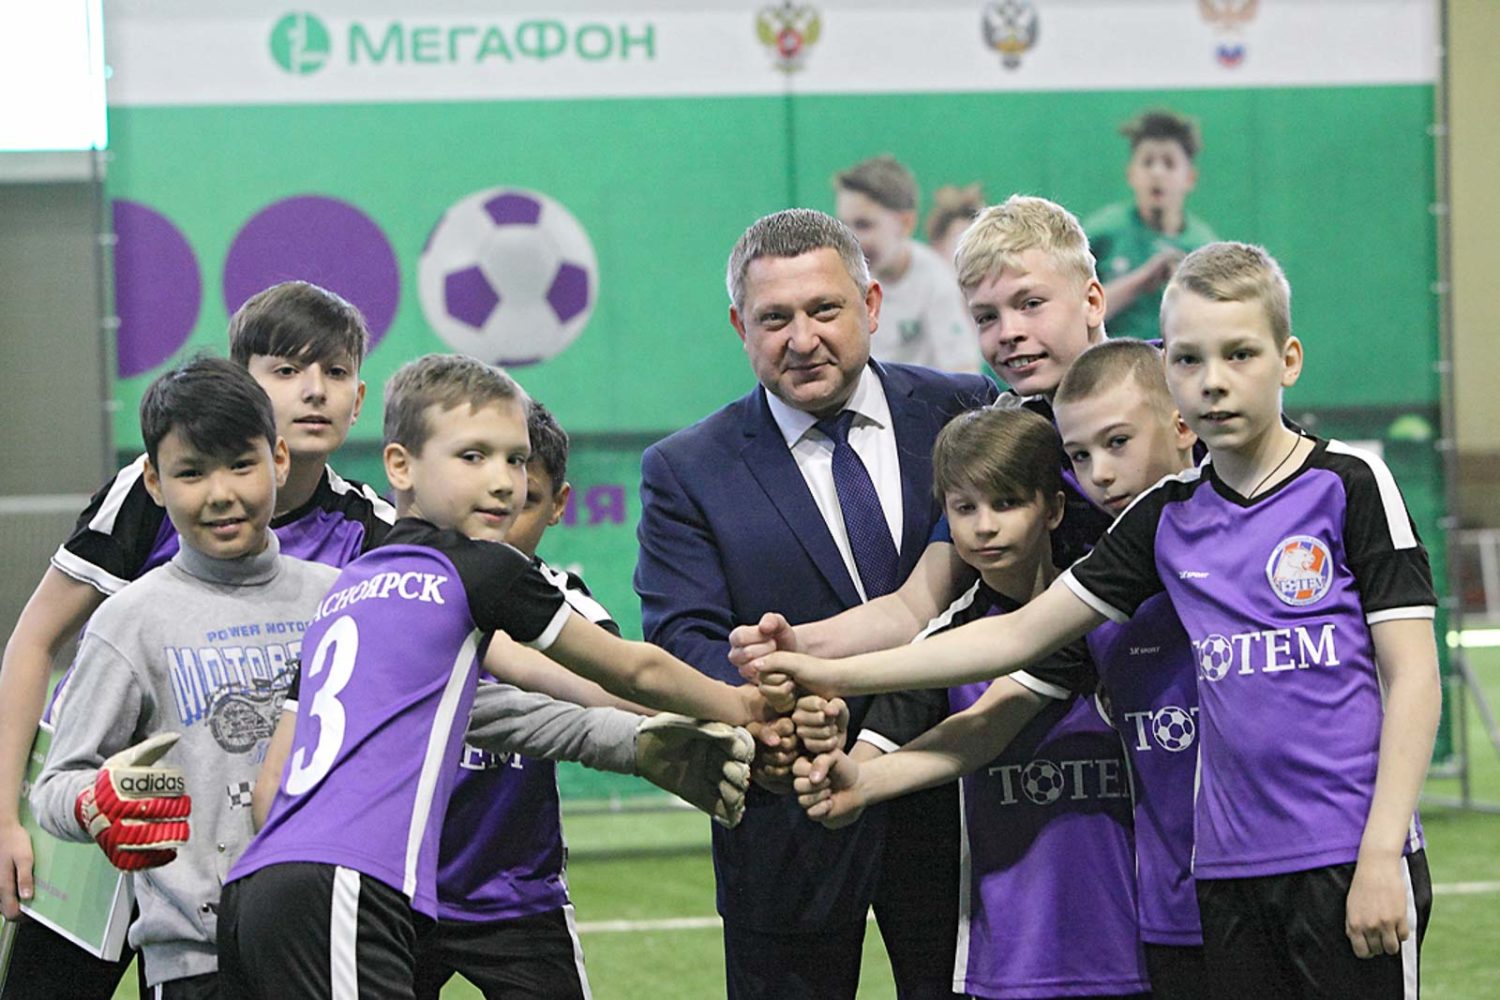 Старт Чемпионата России по мини-футболу